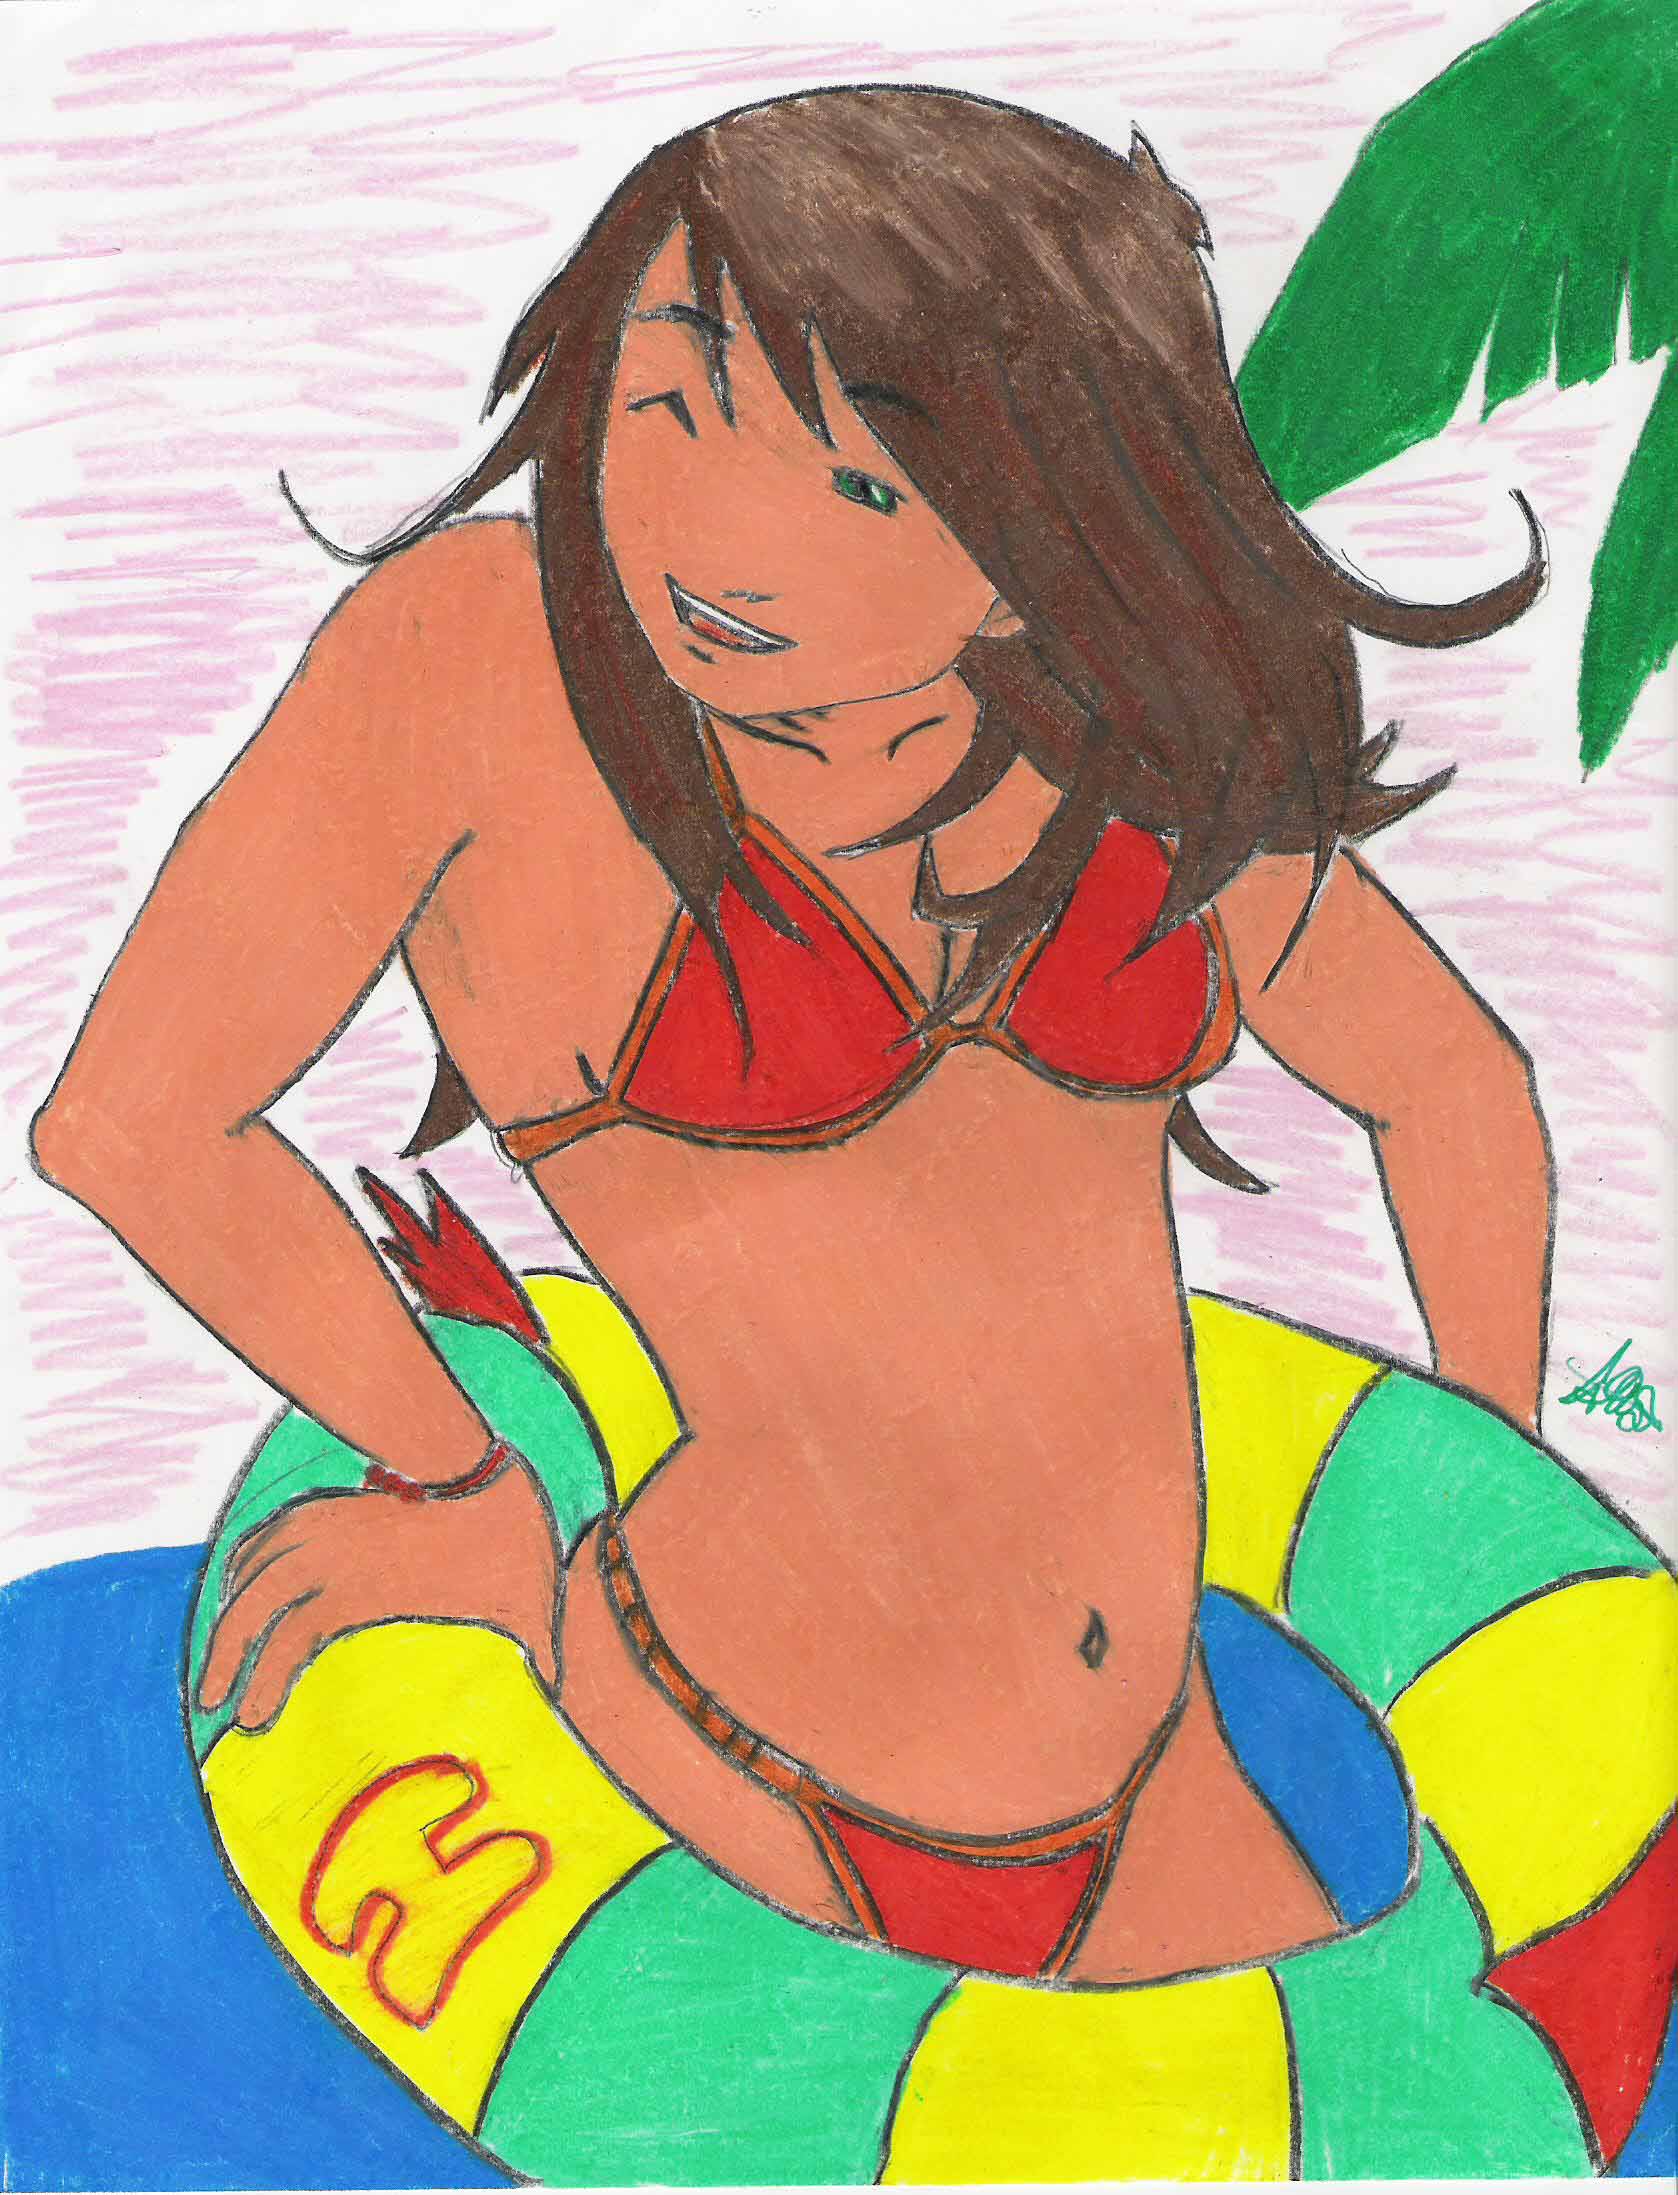 Beach Girl by Carlosvu89